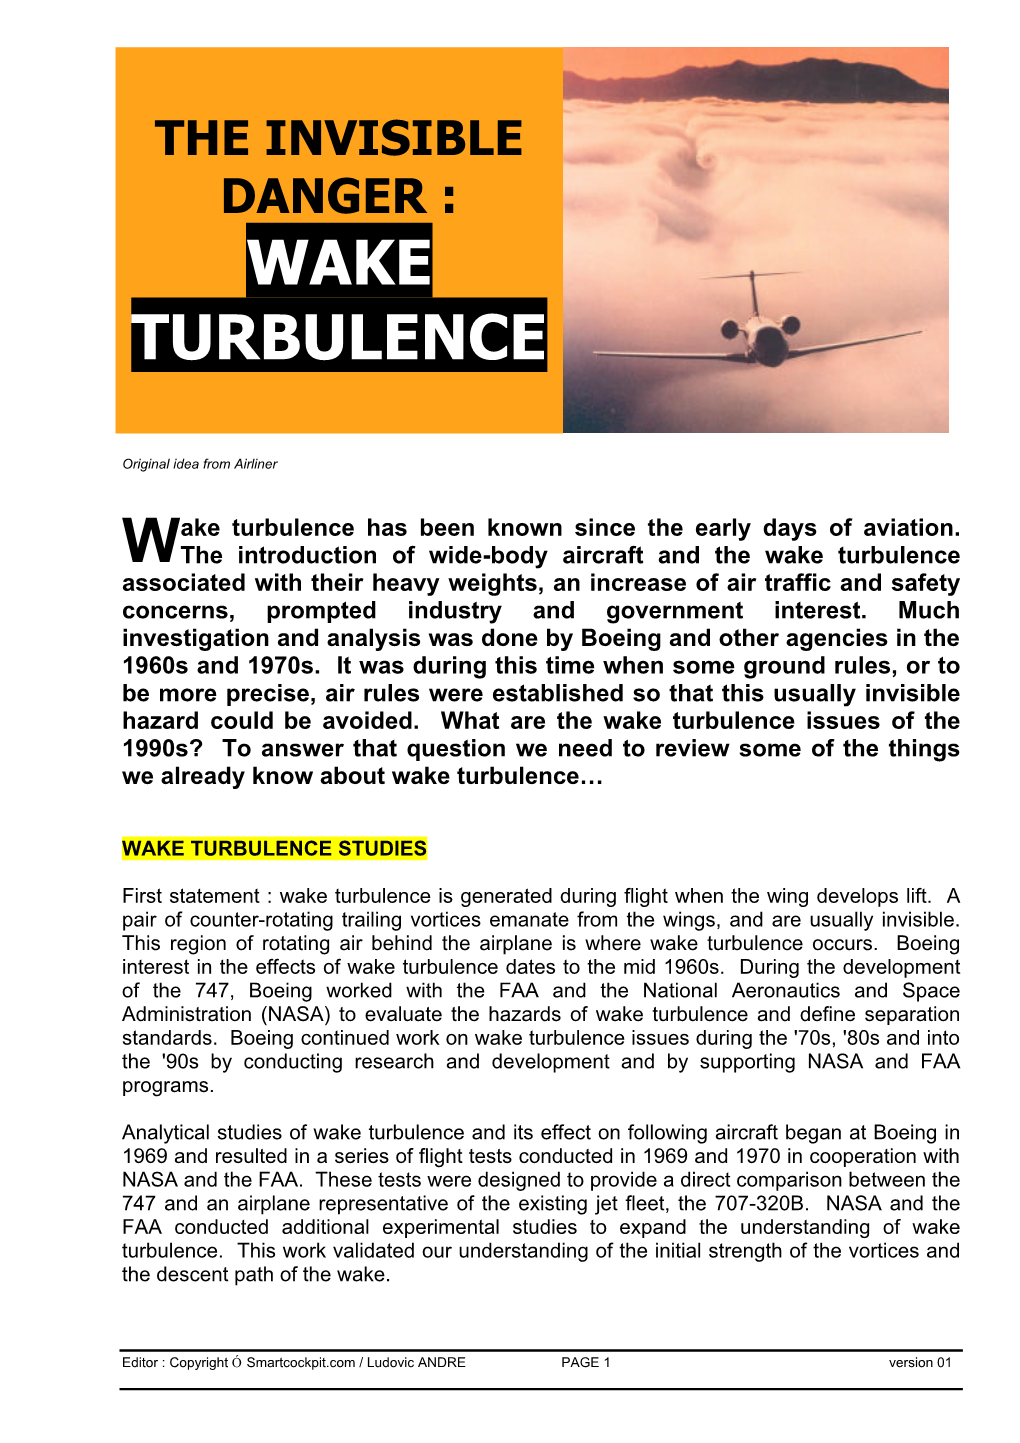 The Invisible Danger: Wake Turbulence